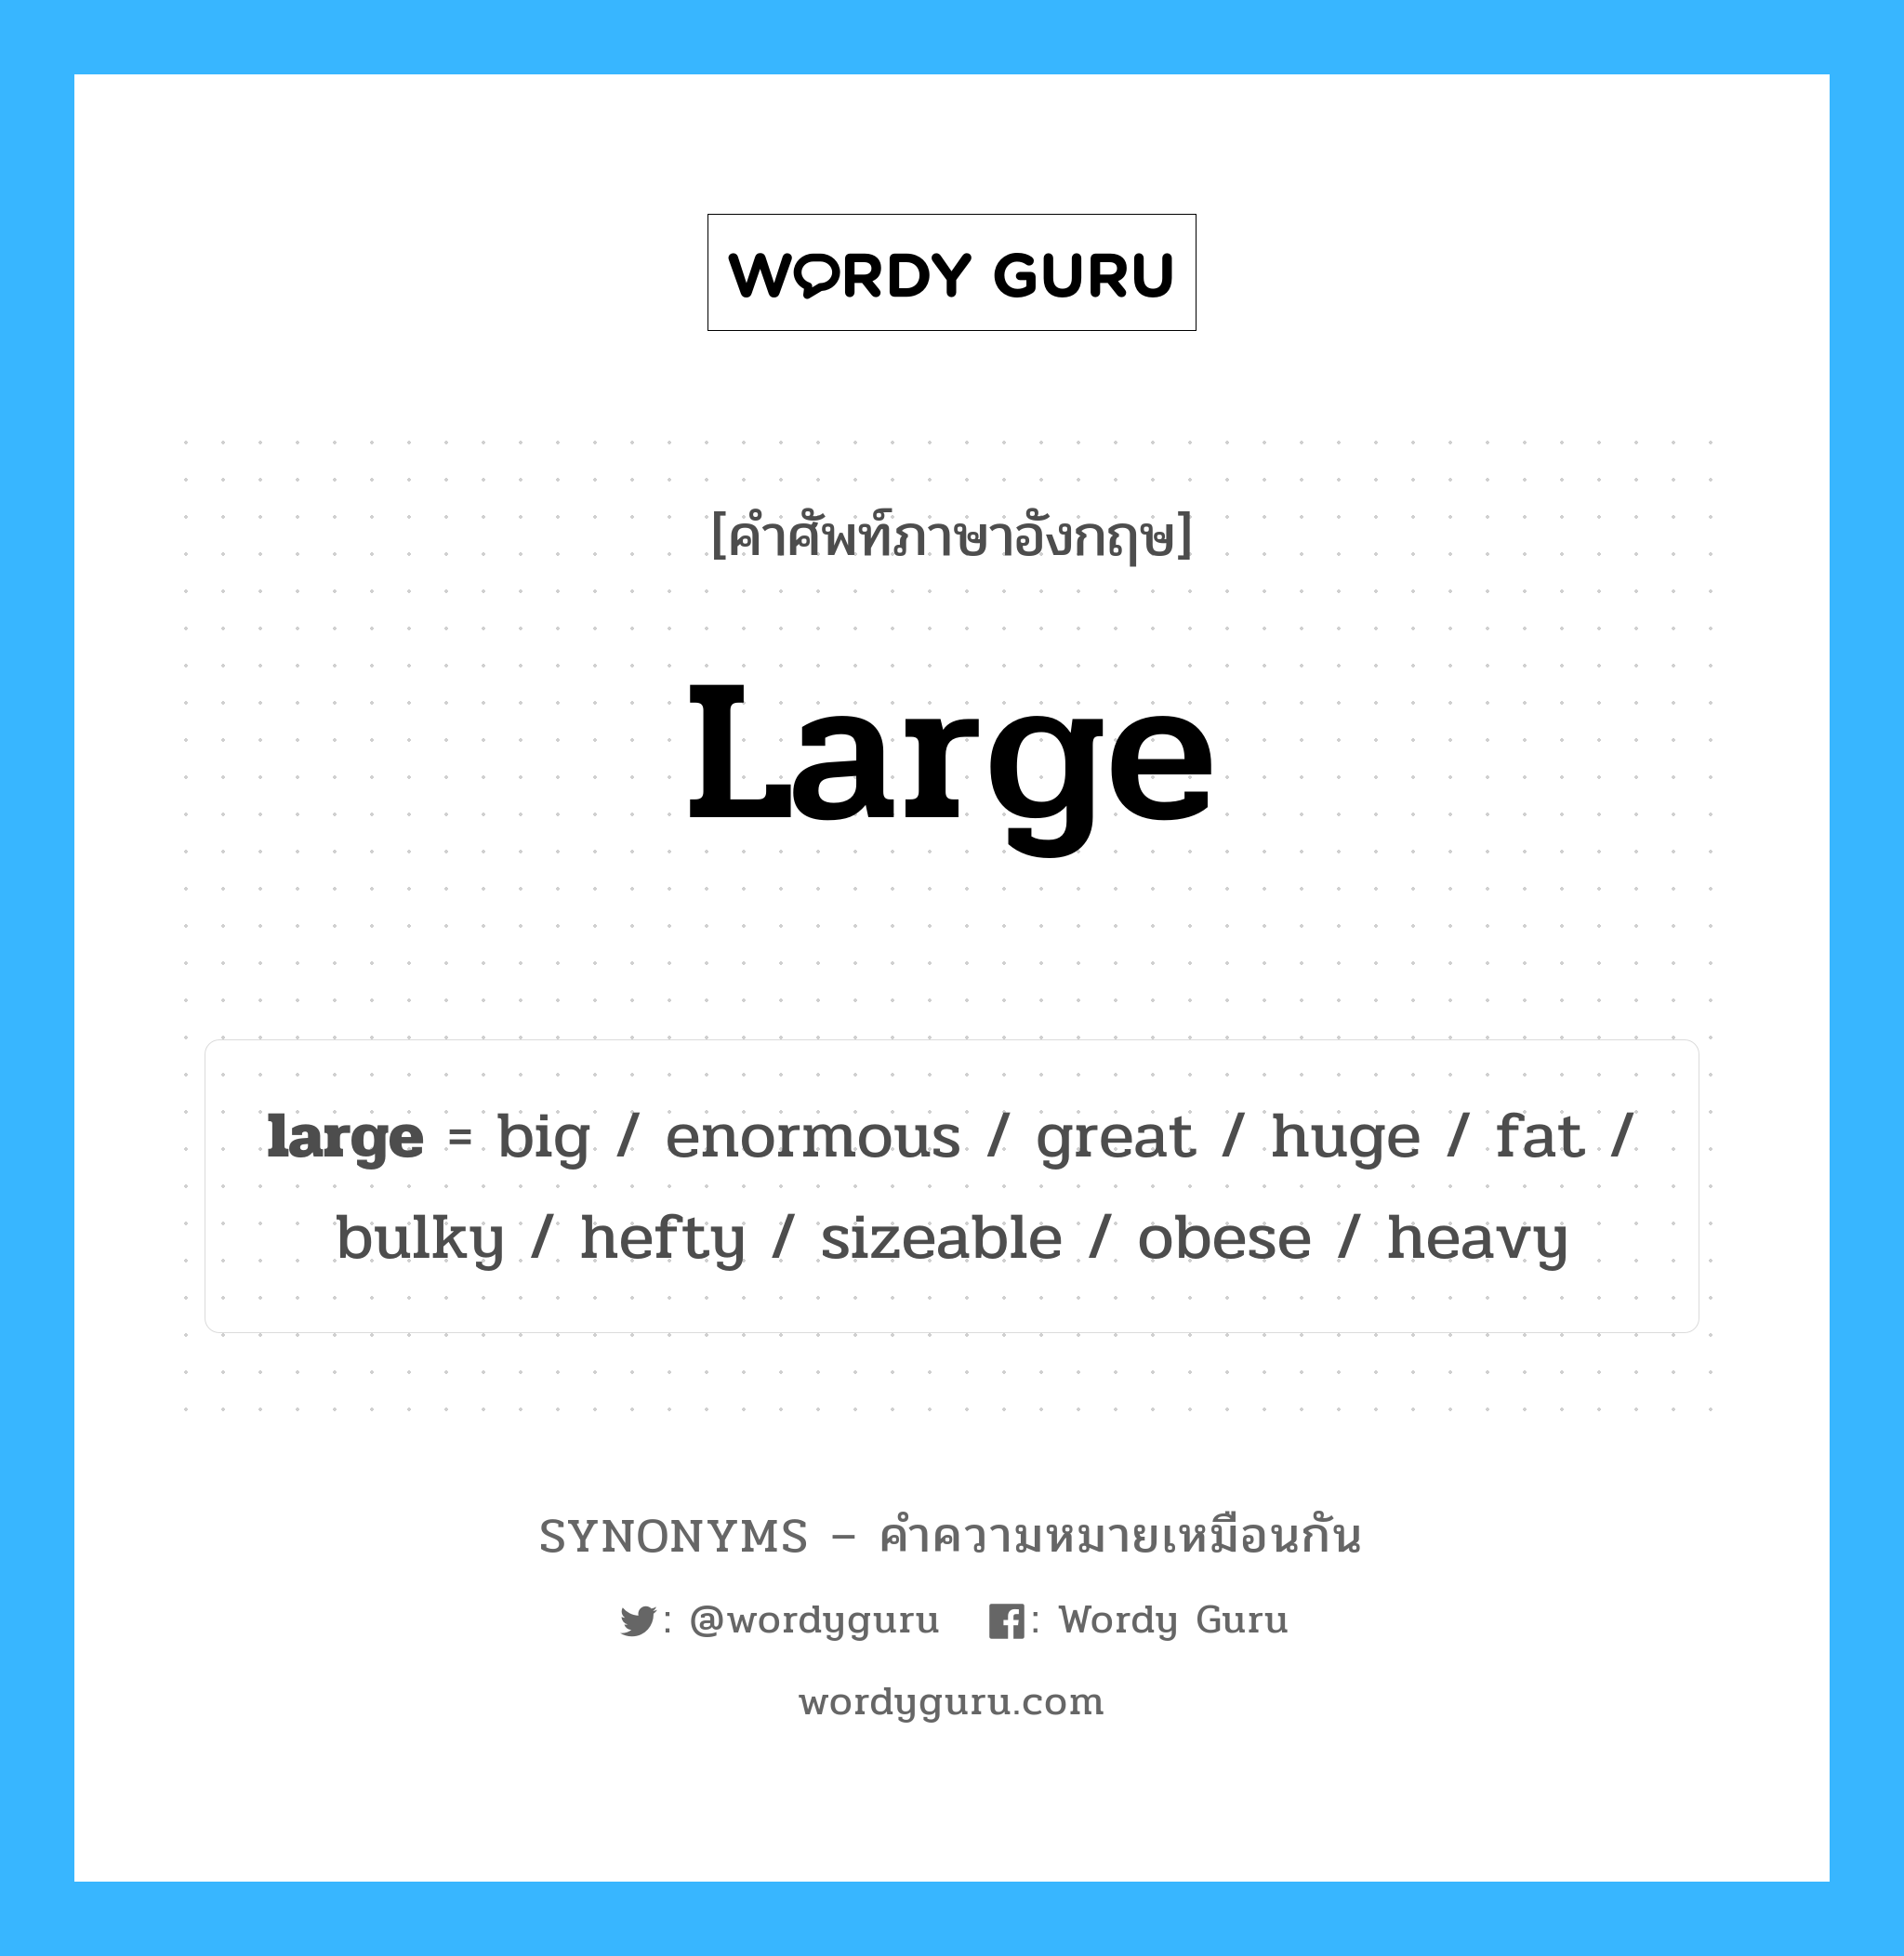 sizeable เป็นหนึ่งใน large และมีคำอื่น ๆ อีกดังนี้, คำศัพท์ภาษาอังกฤษ sizeable ความหมายคล้ายกันกับ large แปลว่า ใหญ่มาก หมวด large